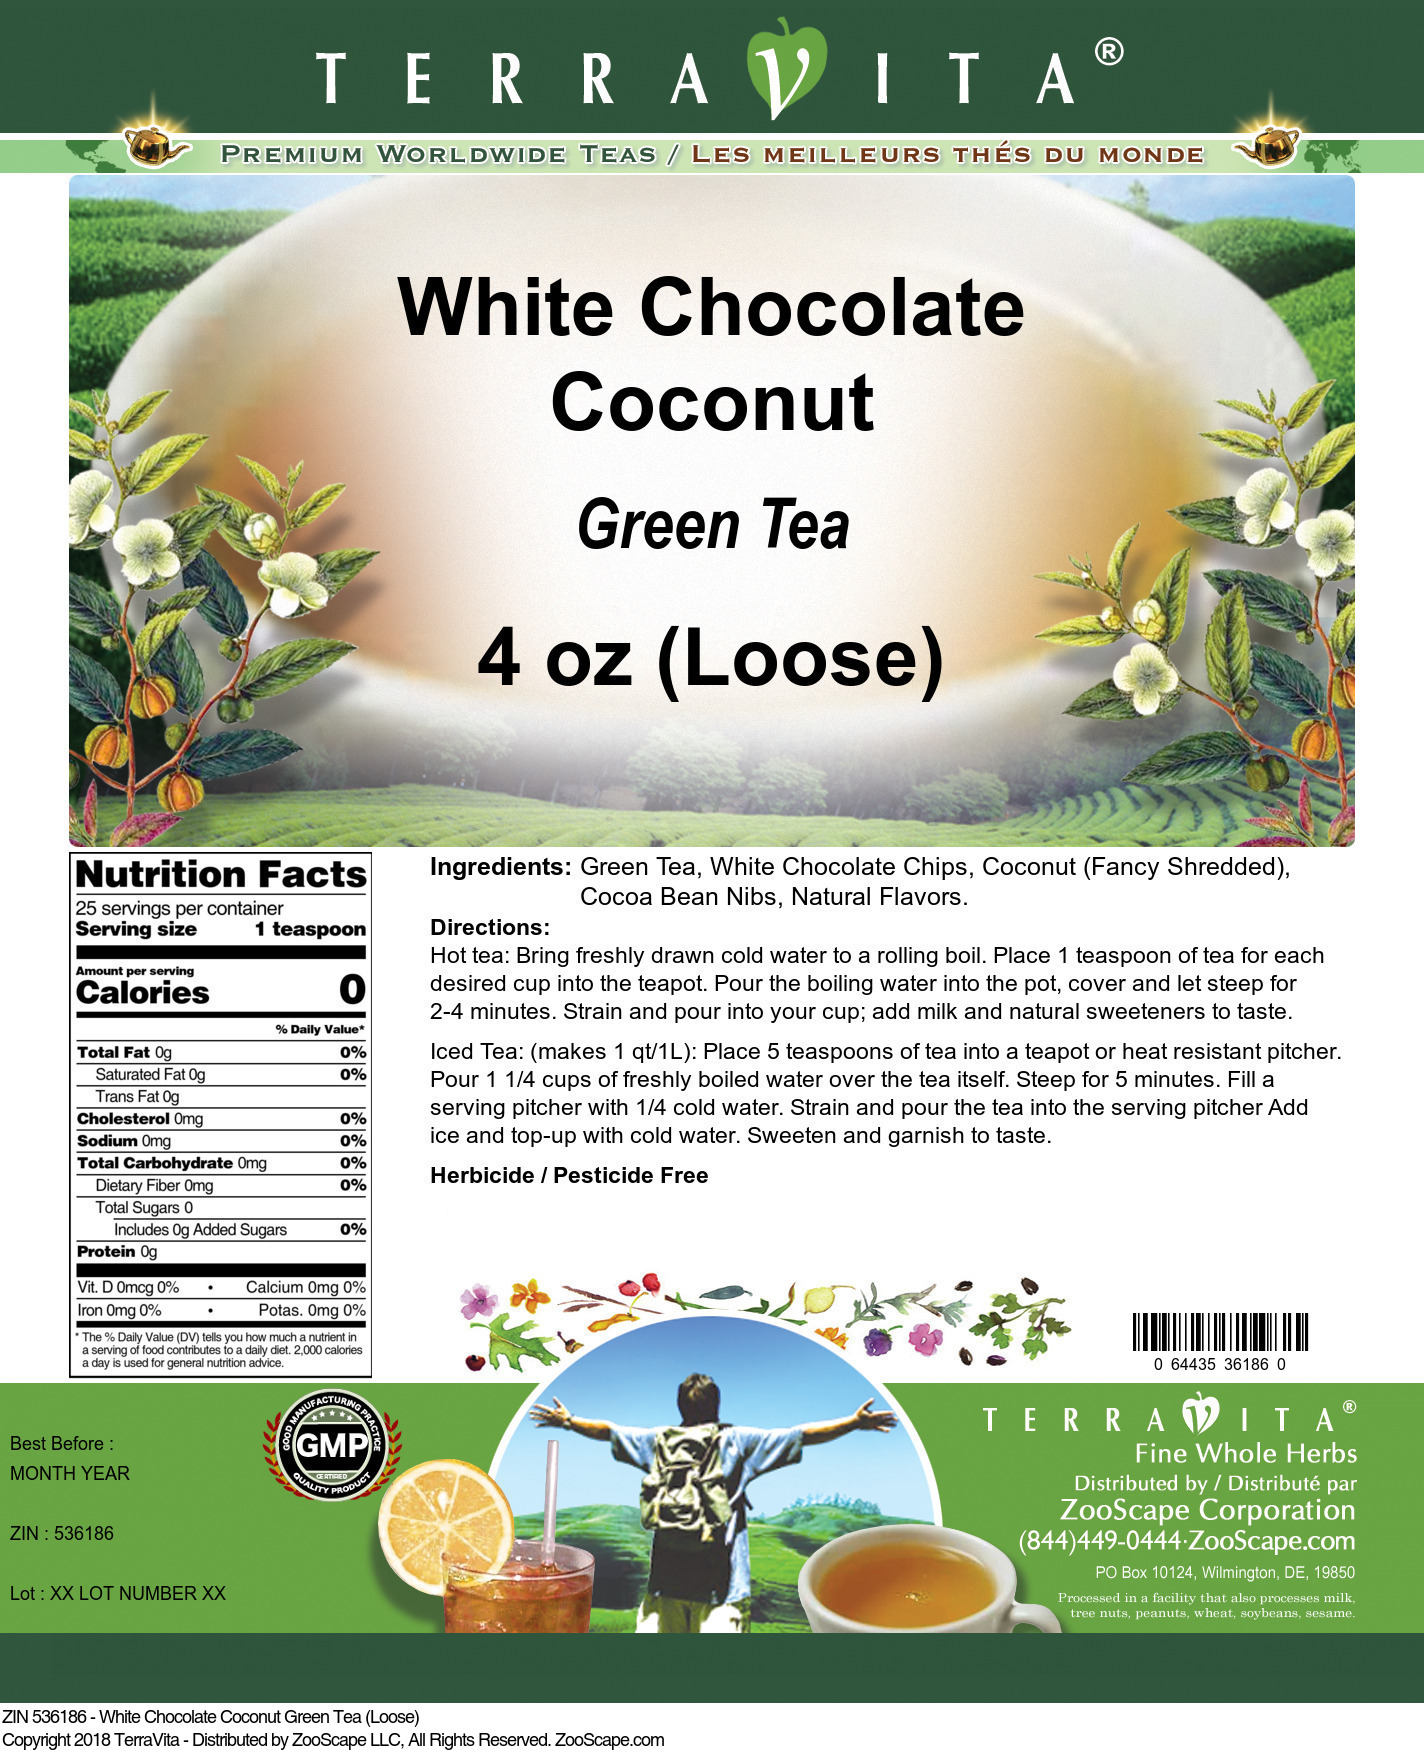 White Chocolate Coconut Green Tea (Loose) - Label